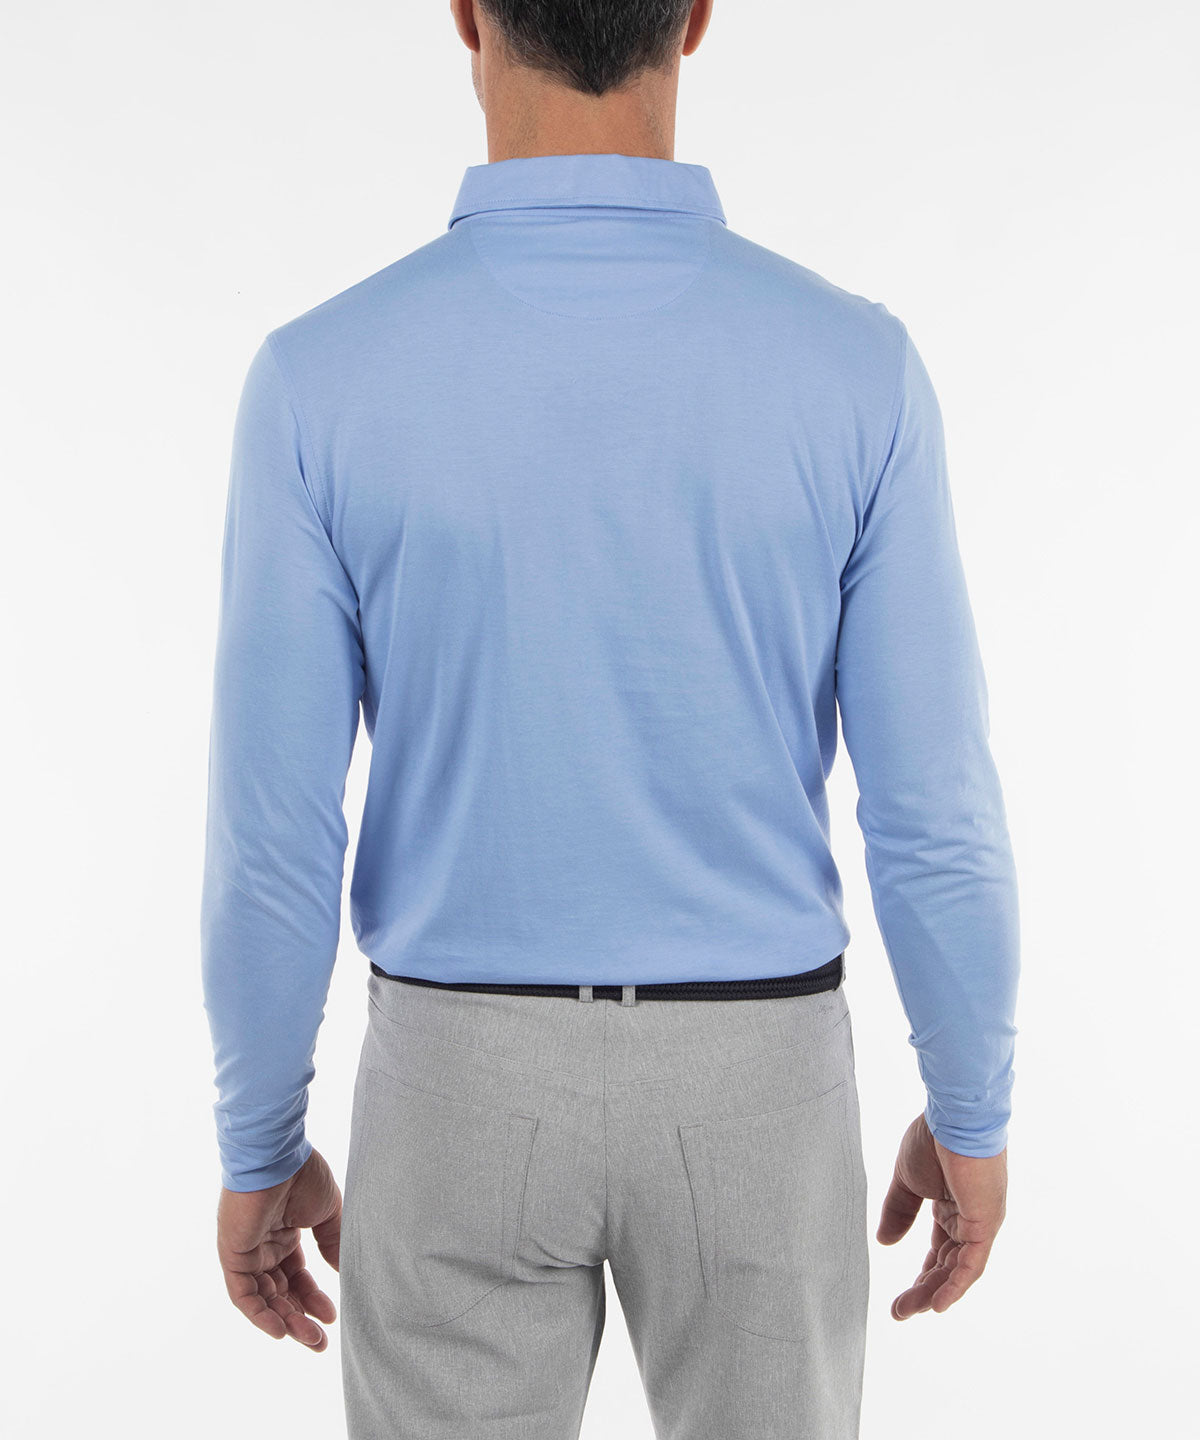 Ultra-Light Peruvian Cotton Long-Sleeve Polo Shirt - Bobby Jones